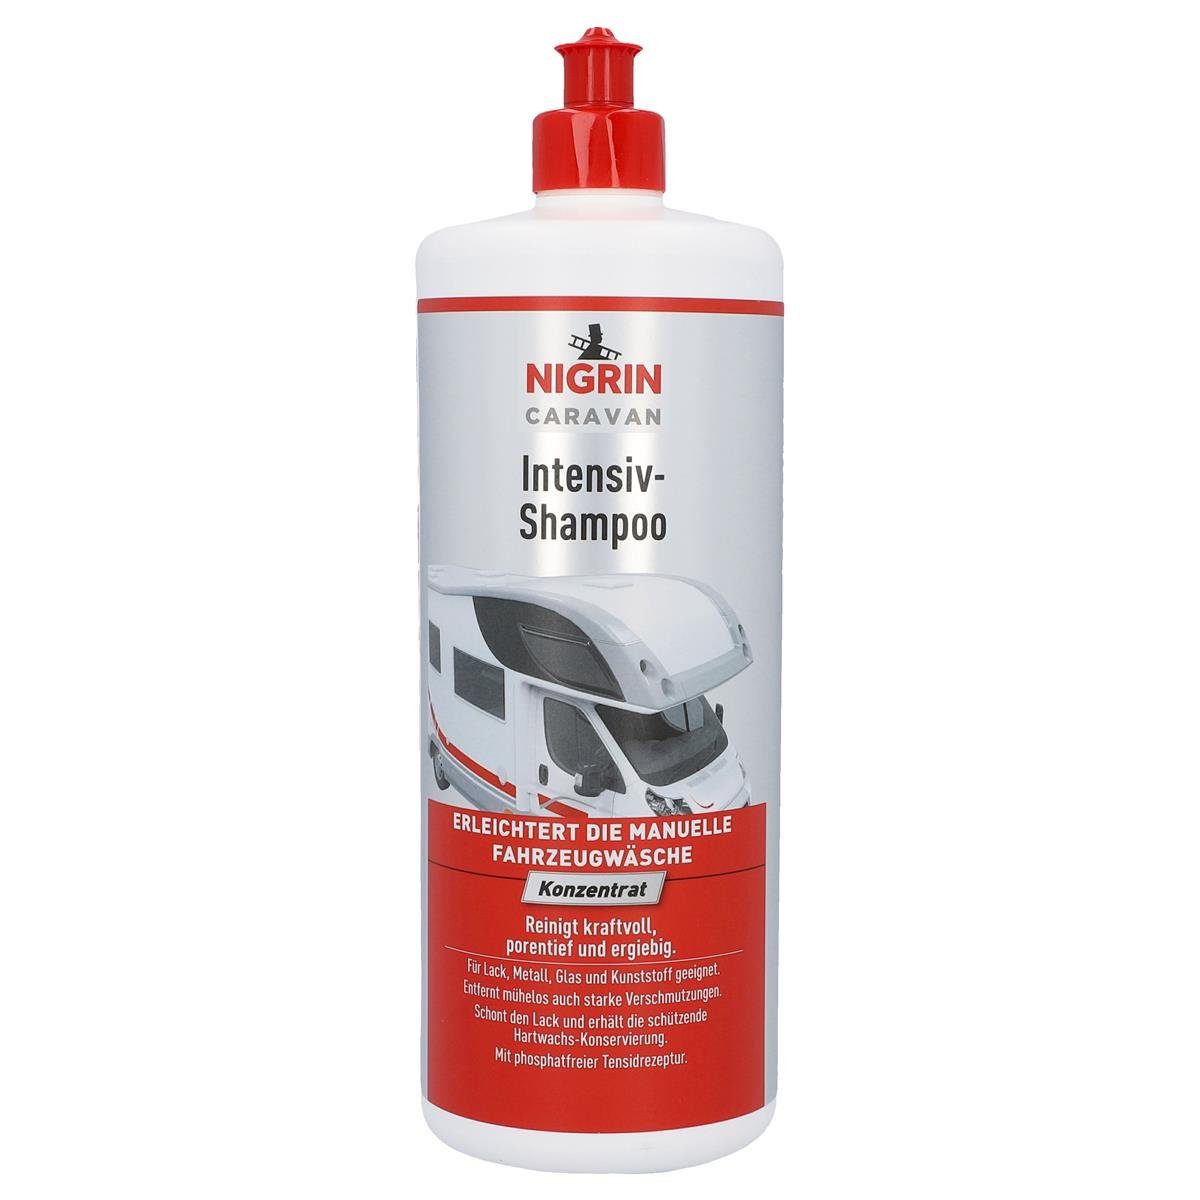 NIGRIN NIGRIN Caravan Intensiv-Shampoo 1L - Reinigt kraftvoll & porentief (1e Auto-Reinigungsmittel